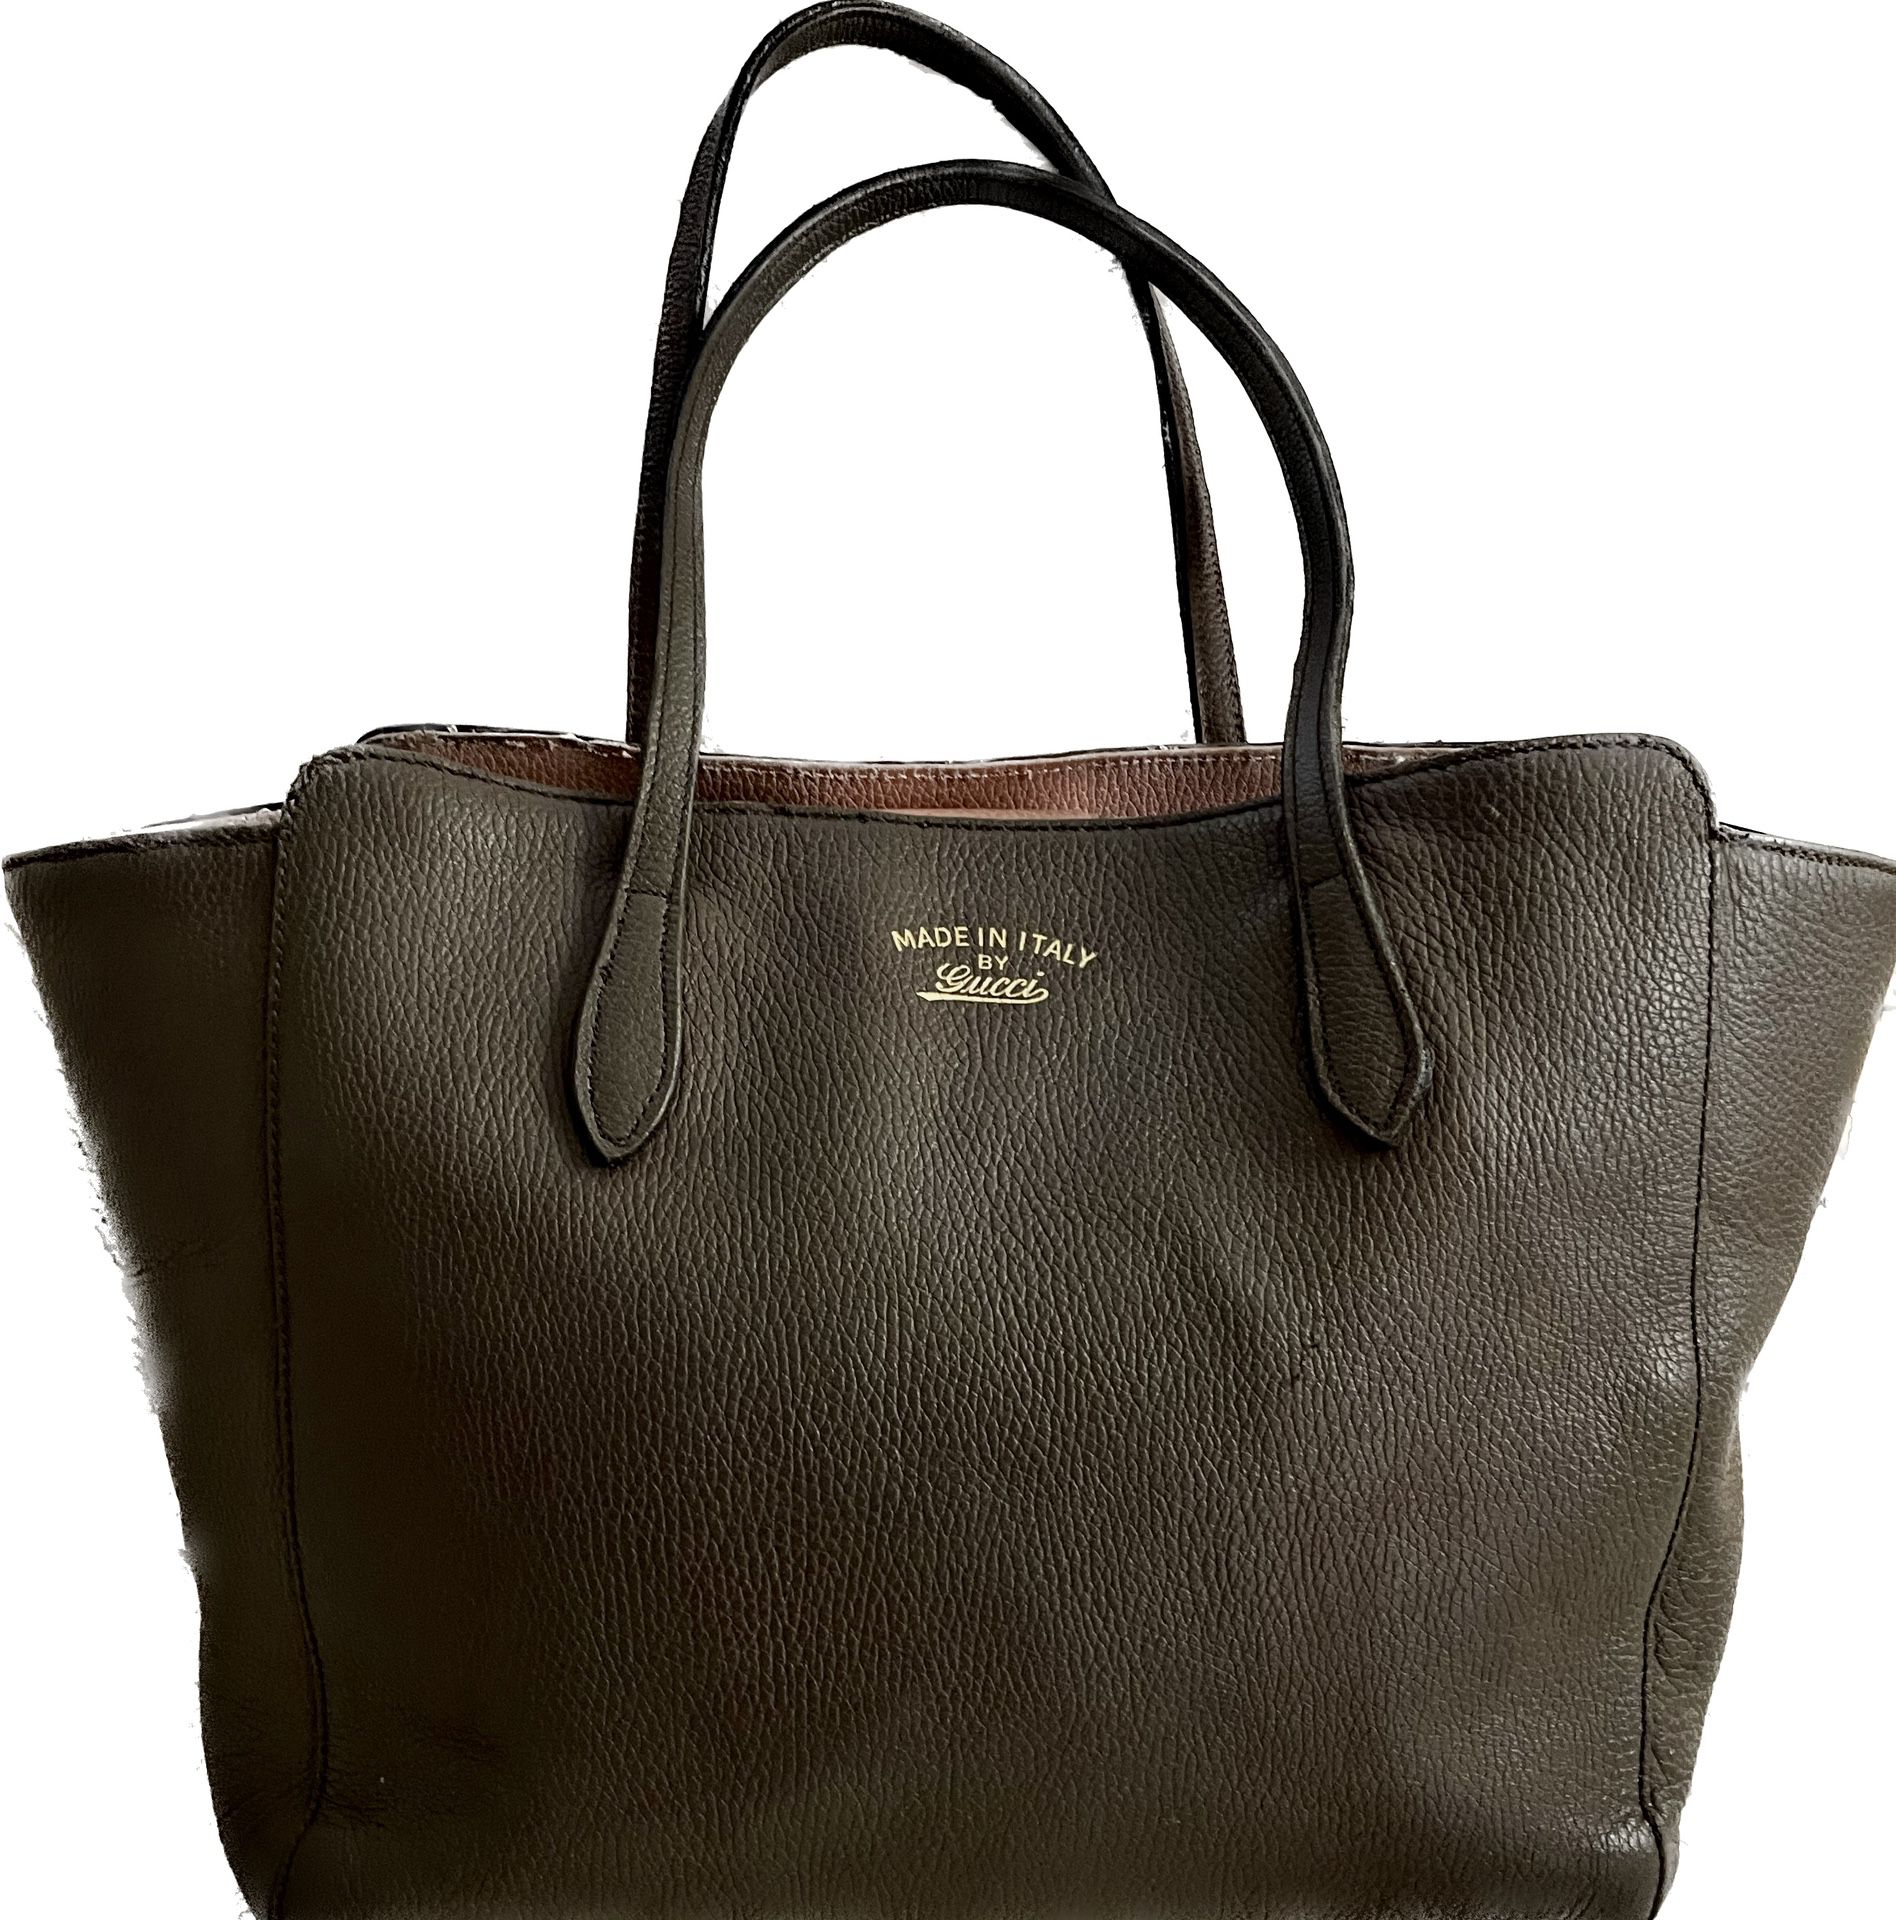 Gucci Tote Pebble Leather Mocha Bag